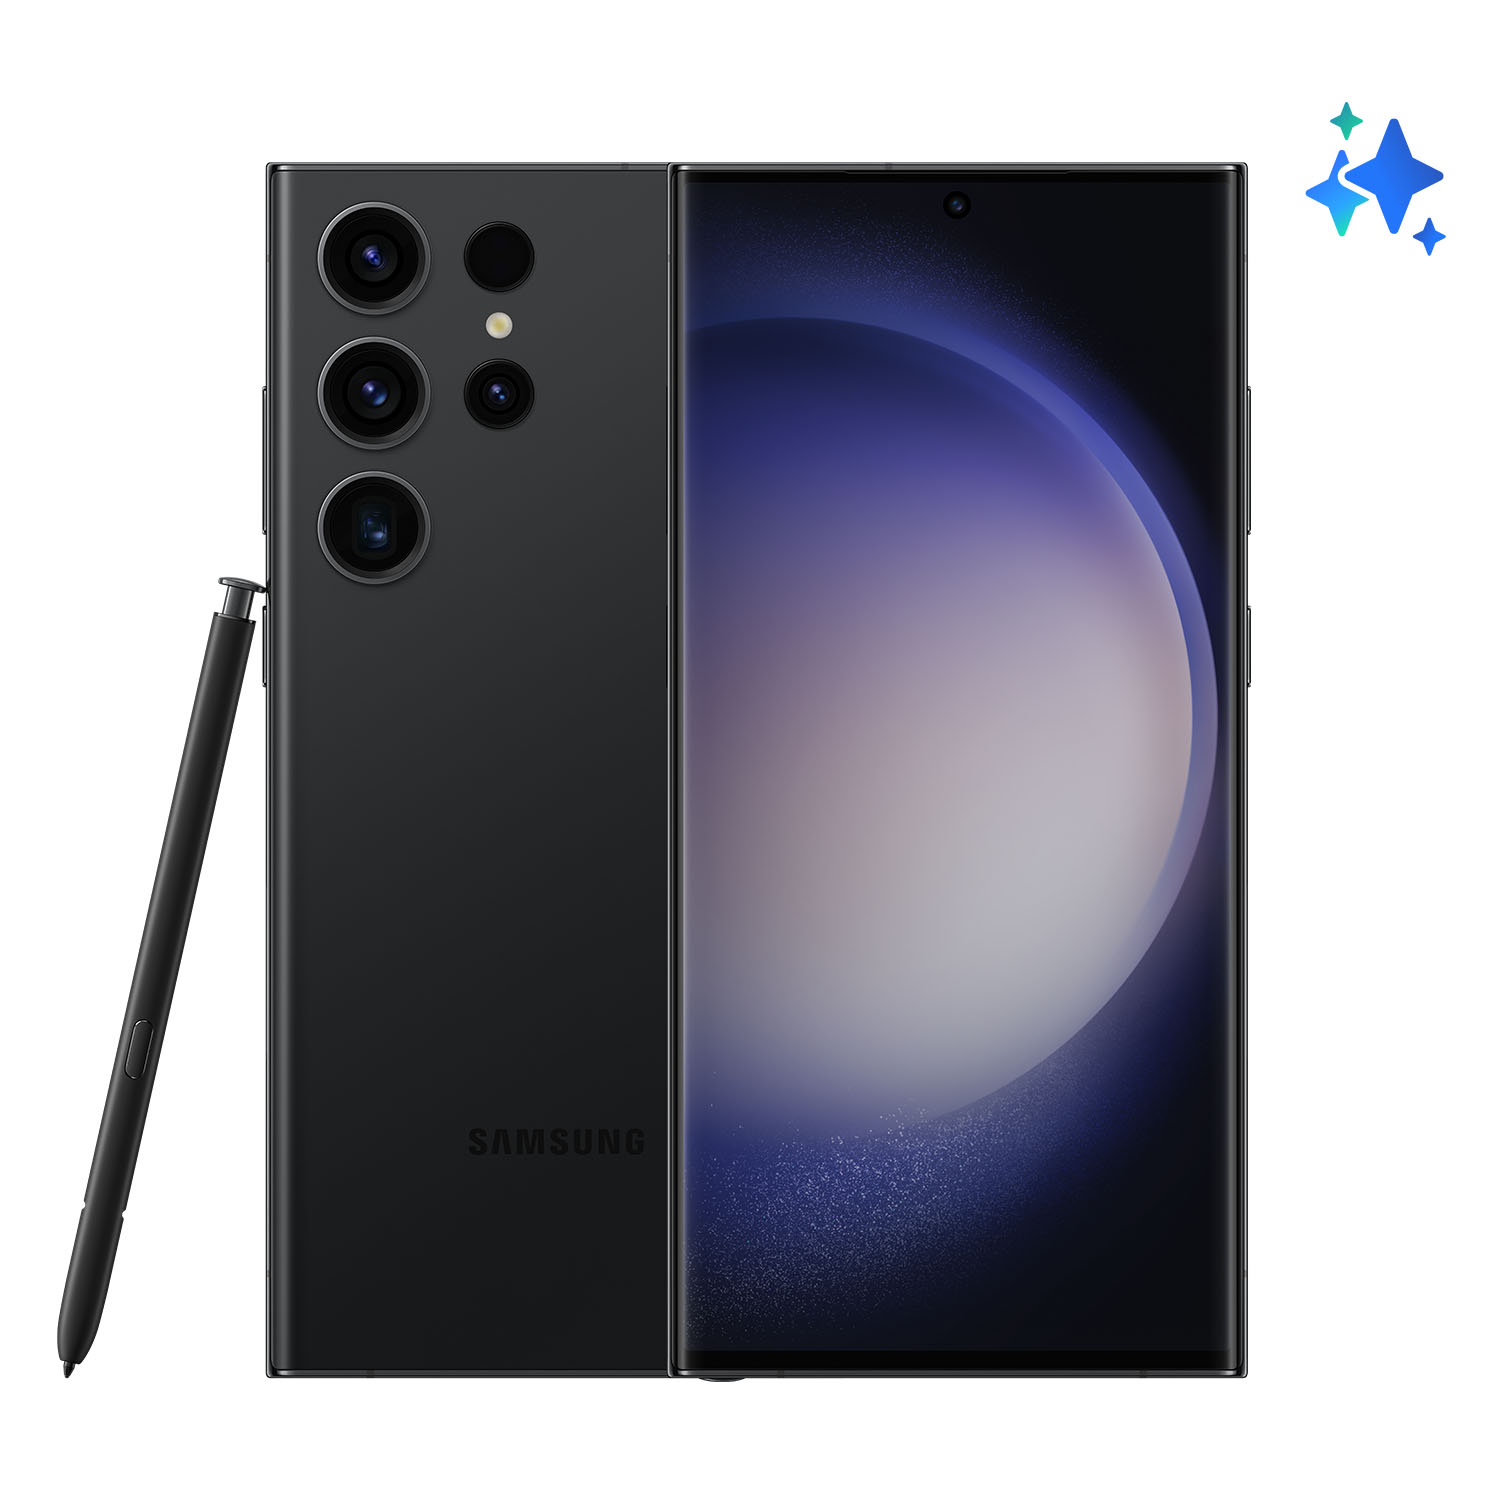 SAMSUNG Galaxy S23 Ultra Cell Phone, Factory Unlocked Android Smartphone, 256GB, 200MP Camera, Night Mode, Long Battery Life, S Pen, US Version, 2023, Phantom Black - image 1 of 19